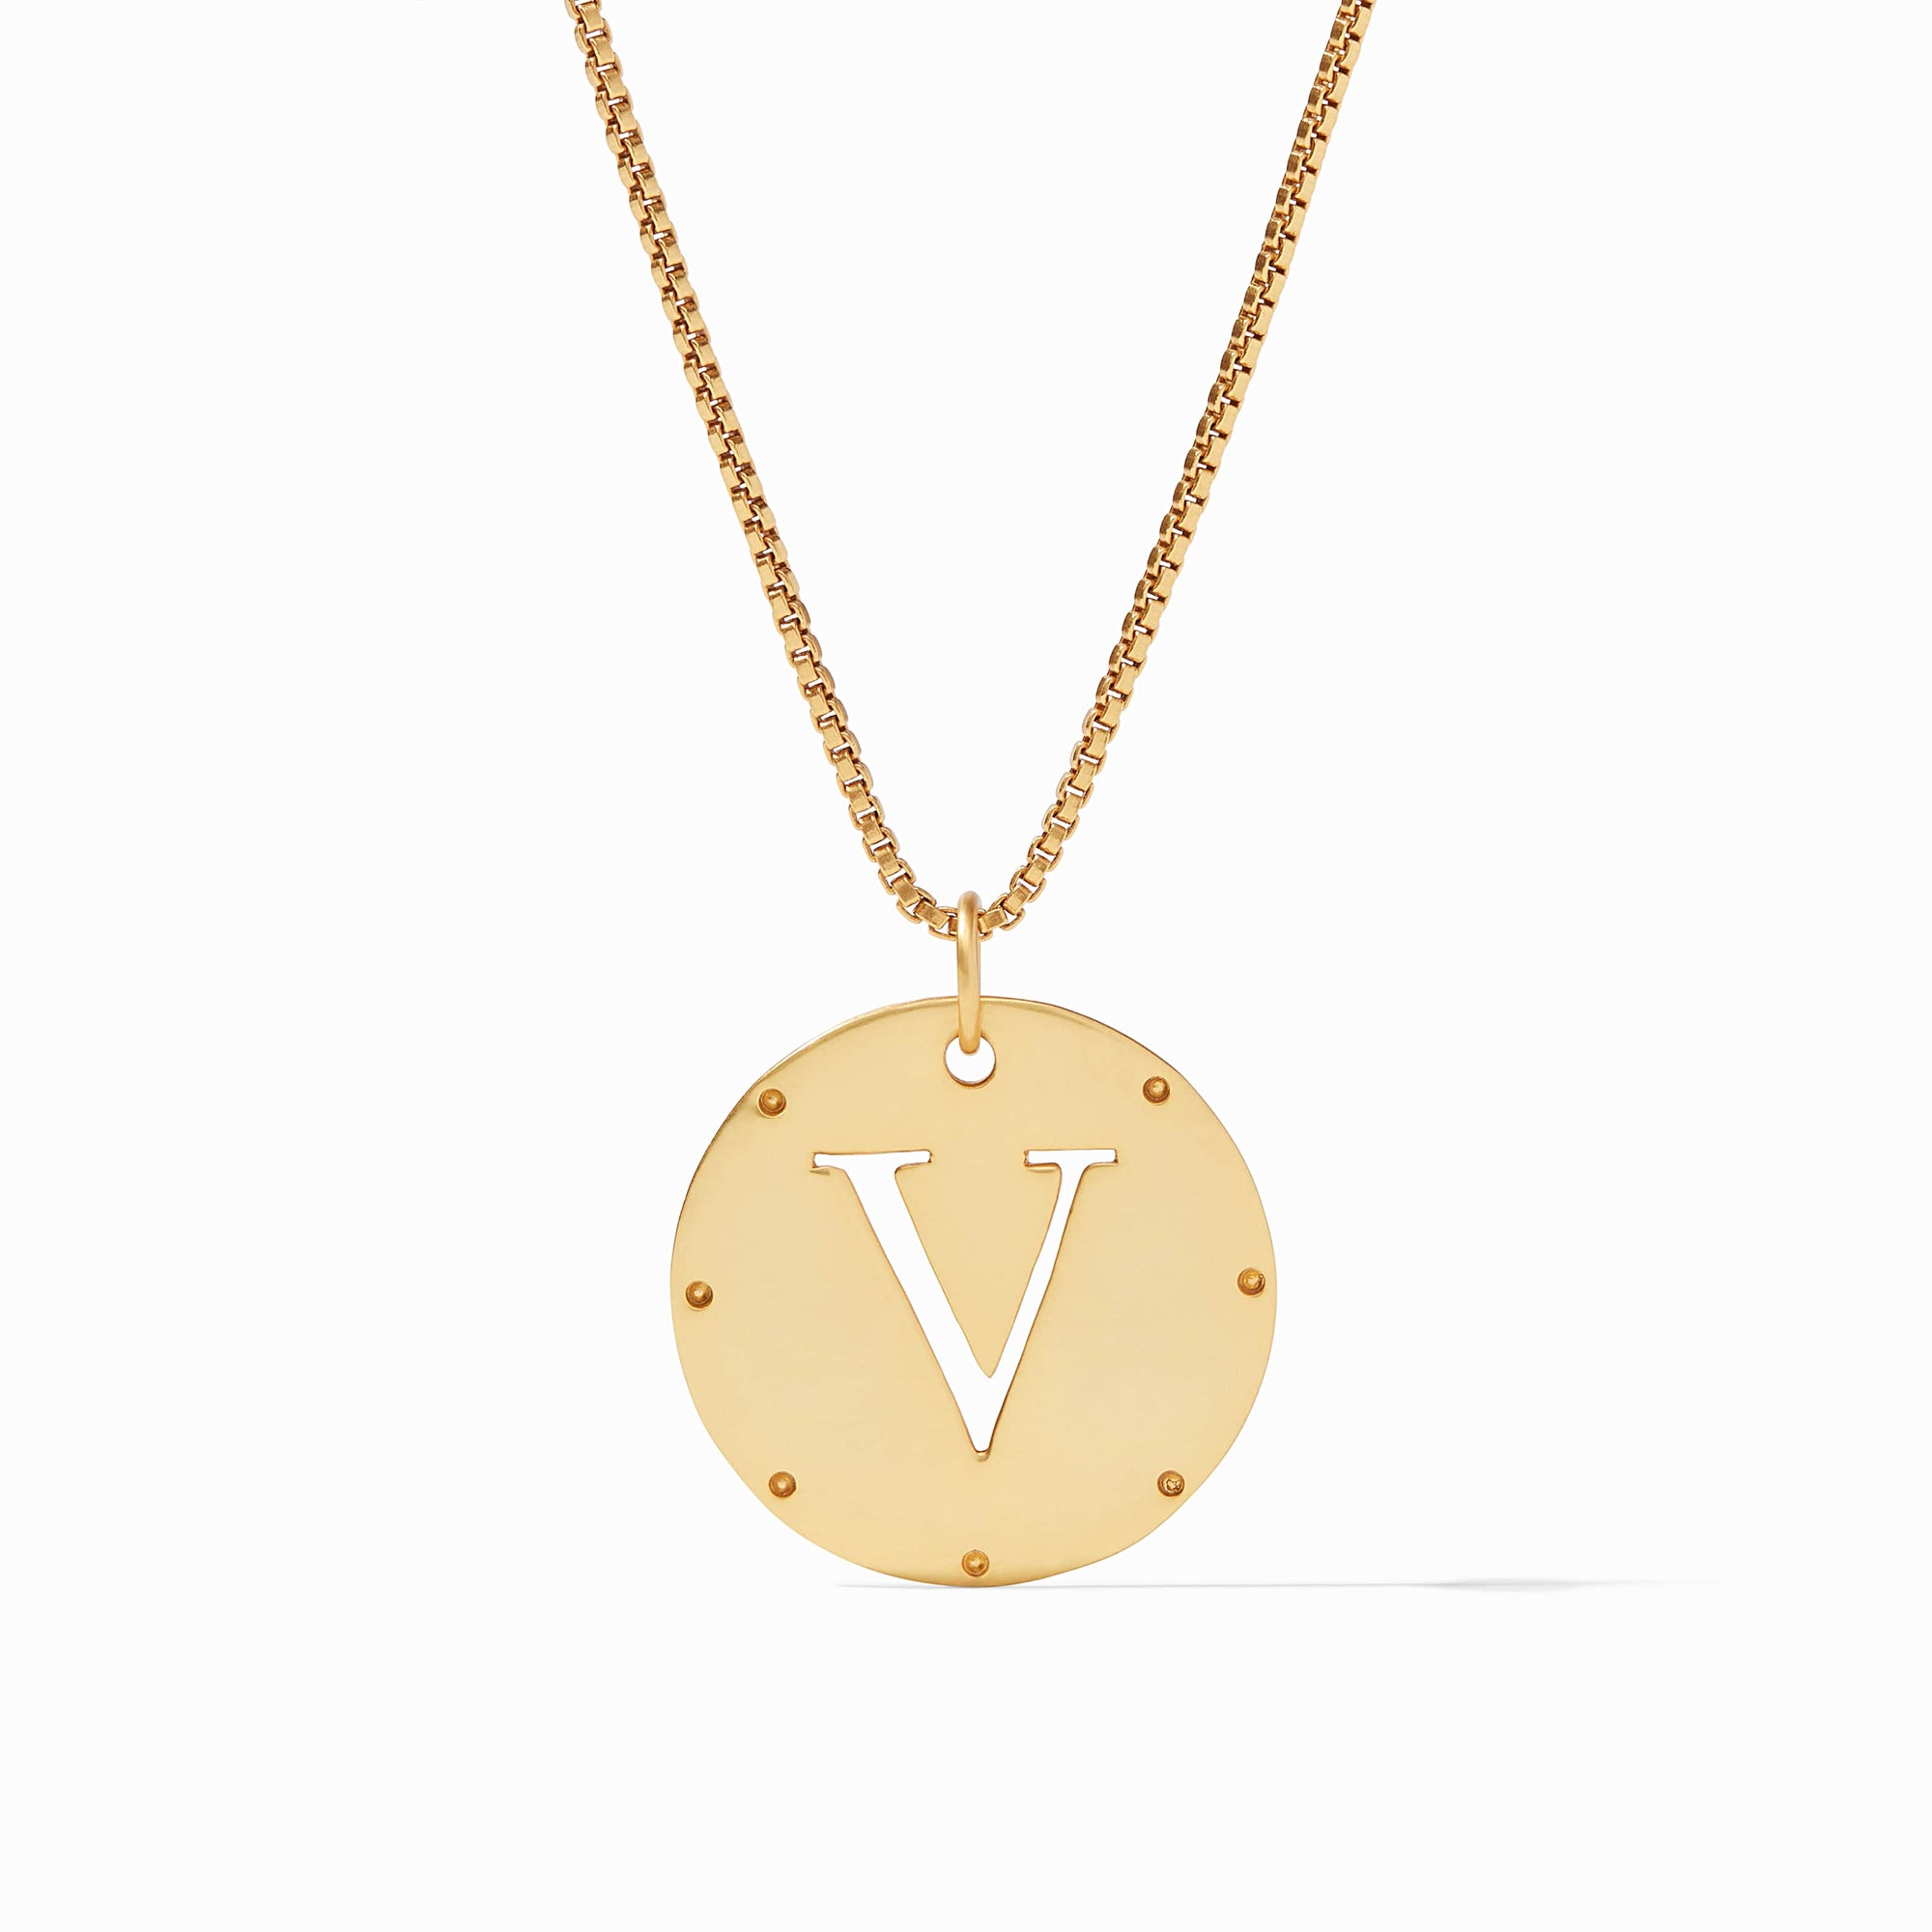 Louis Vuitton Bracelet Women Initial e Gold Chain Logo Bangle W